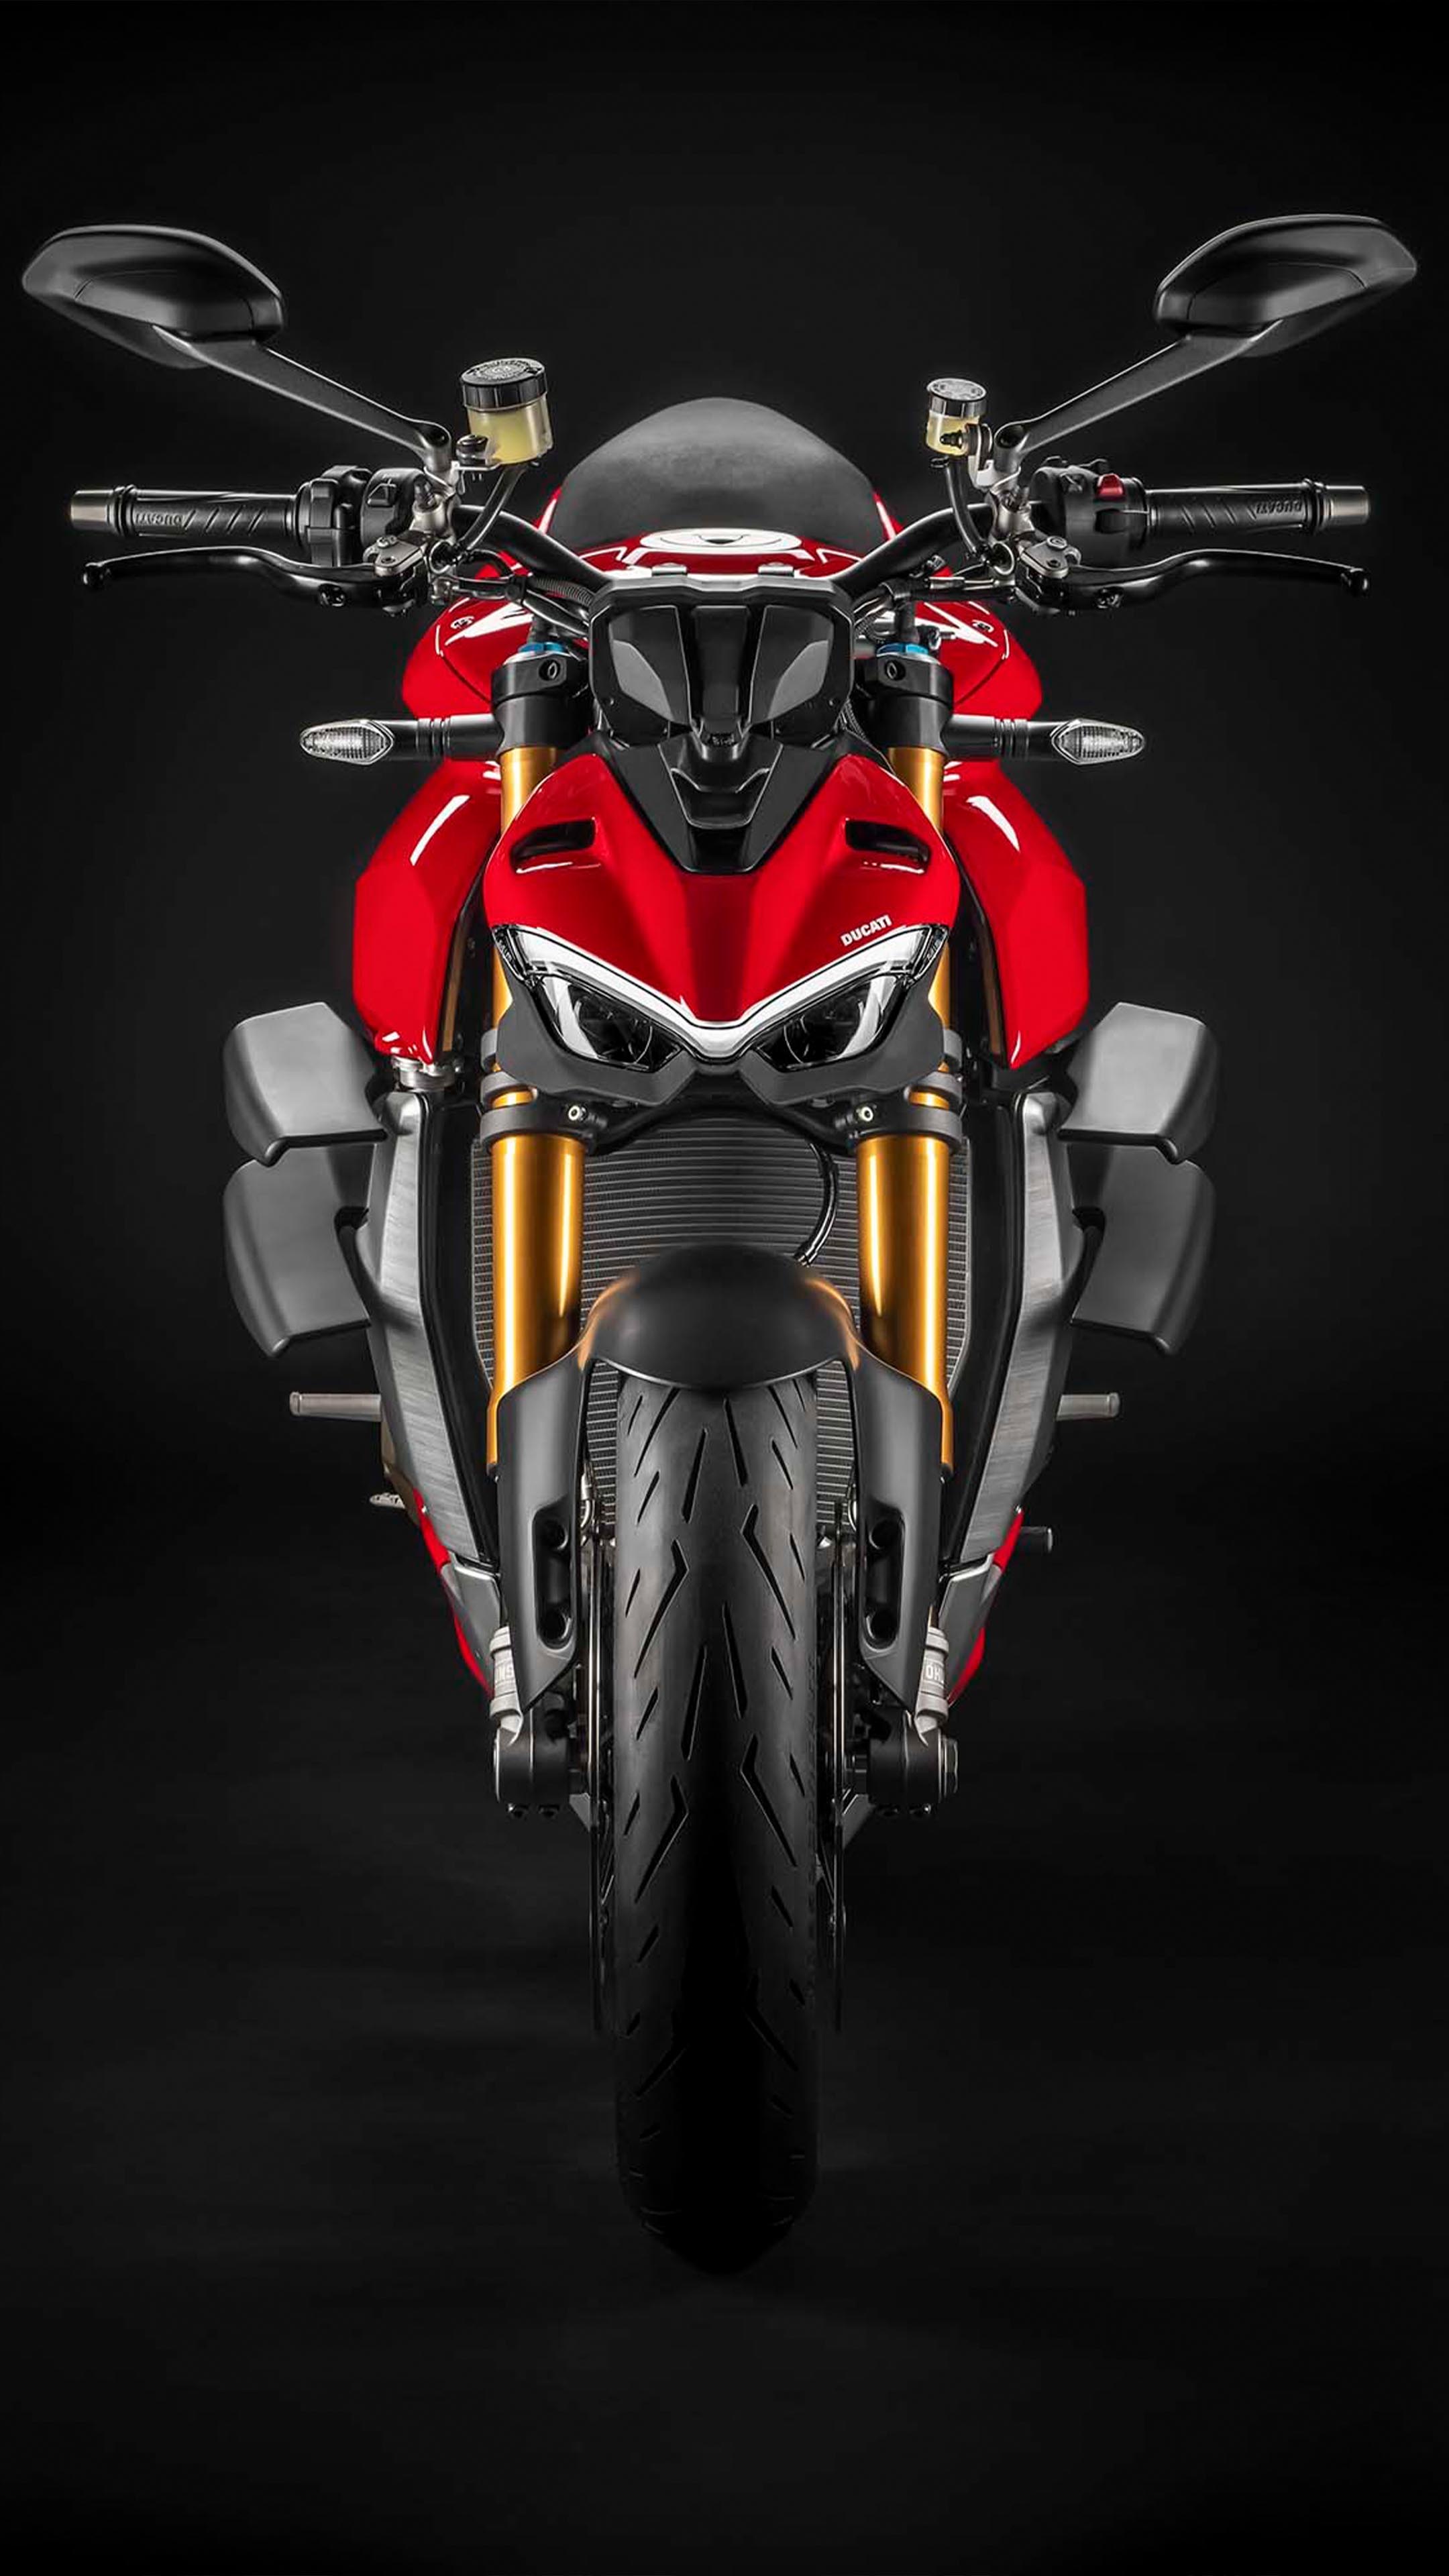 Ducati Streetfighter V4 4K Ultra HD Mobile Wallpaper